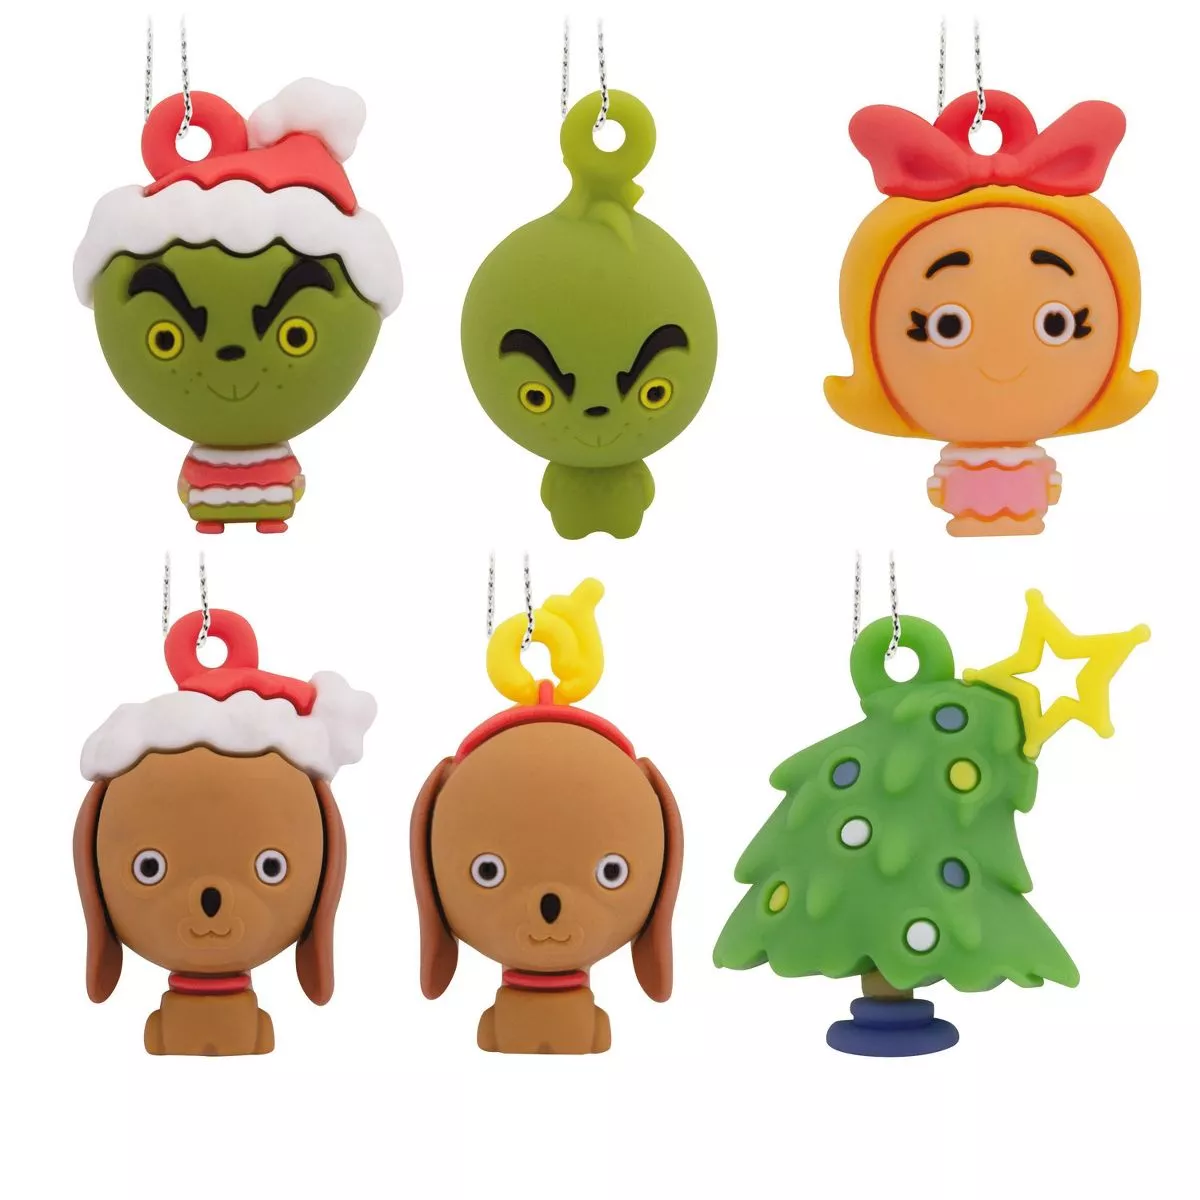 Disney Lilo and Stitch Hallmark Christmas Ornament - Hooked on